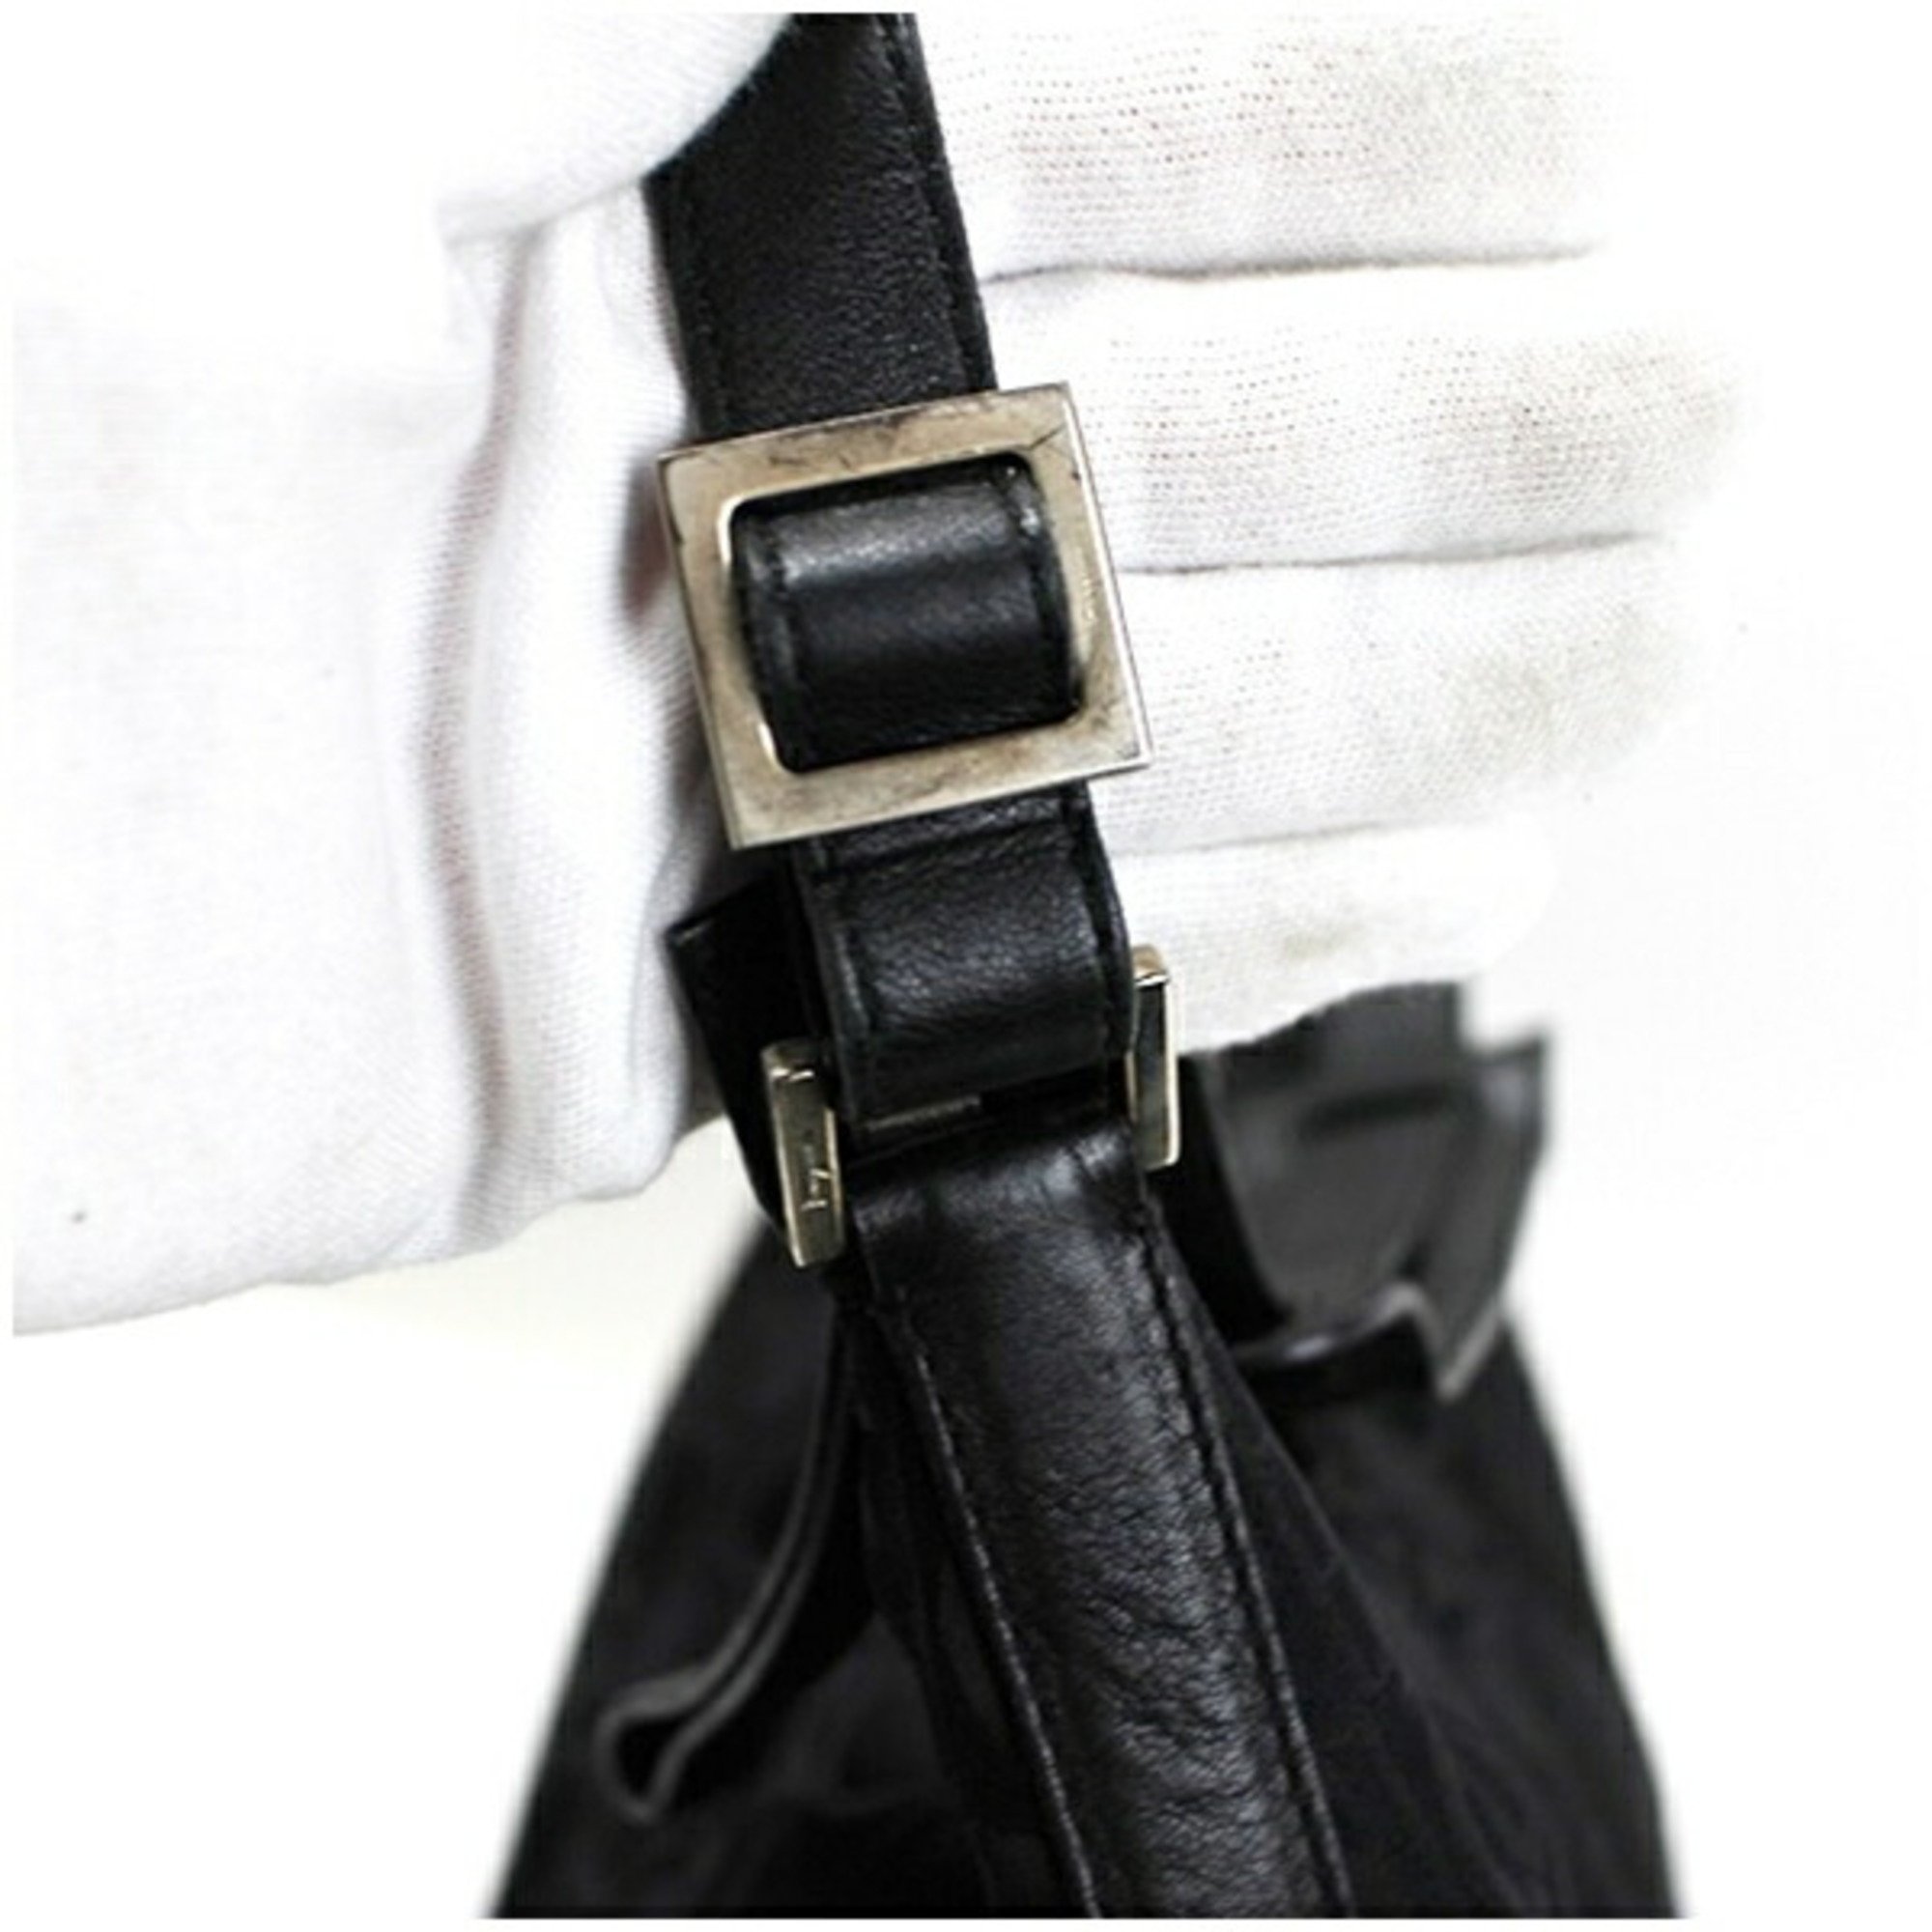 Salvatore Ferragamo Shoulder Bag Tote Satin Canvas x Leather Black Gancini Pattern AU-21 0870 Women's